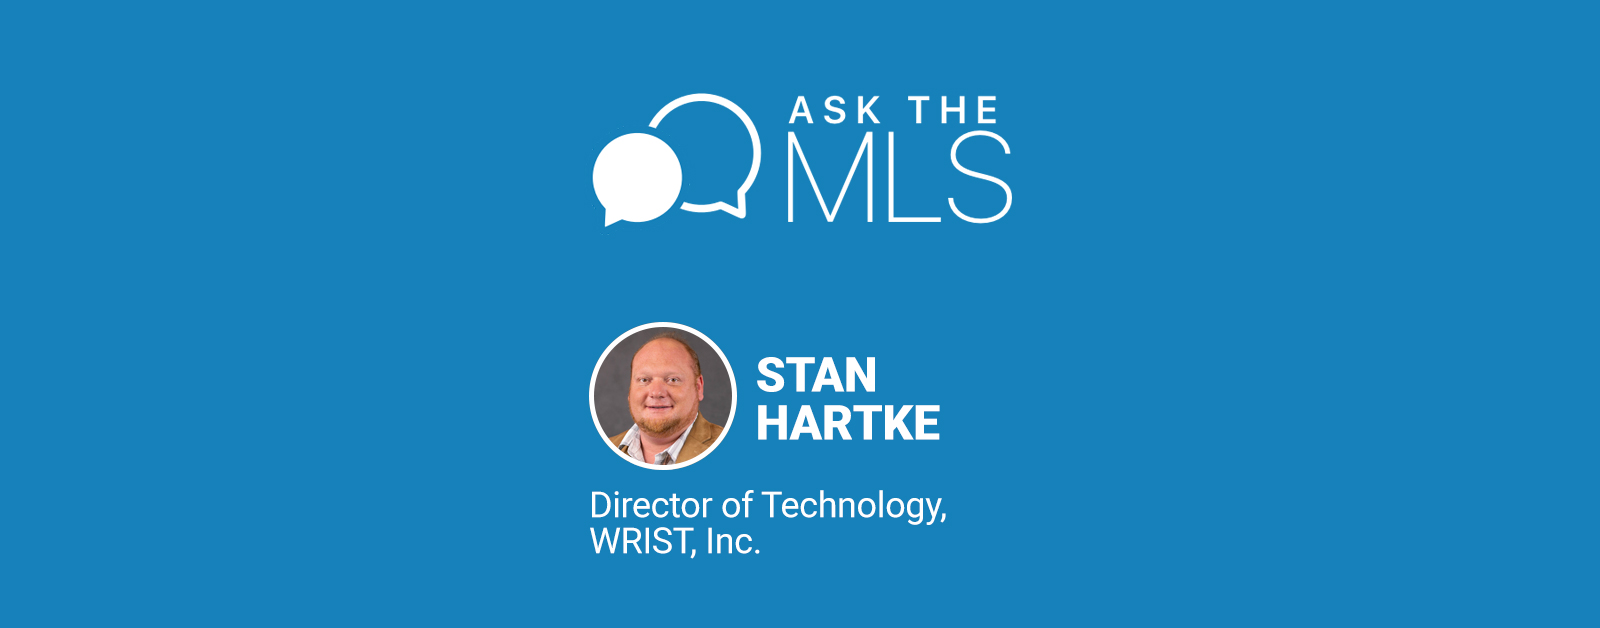 Ask the MLS: Meet Stan Hartke of WRIST